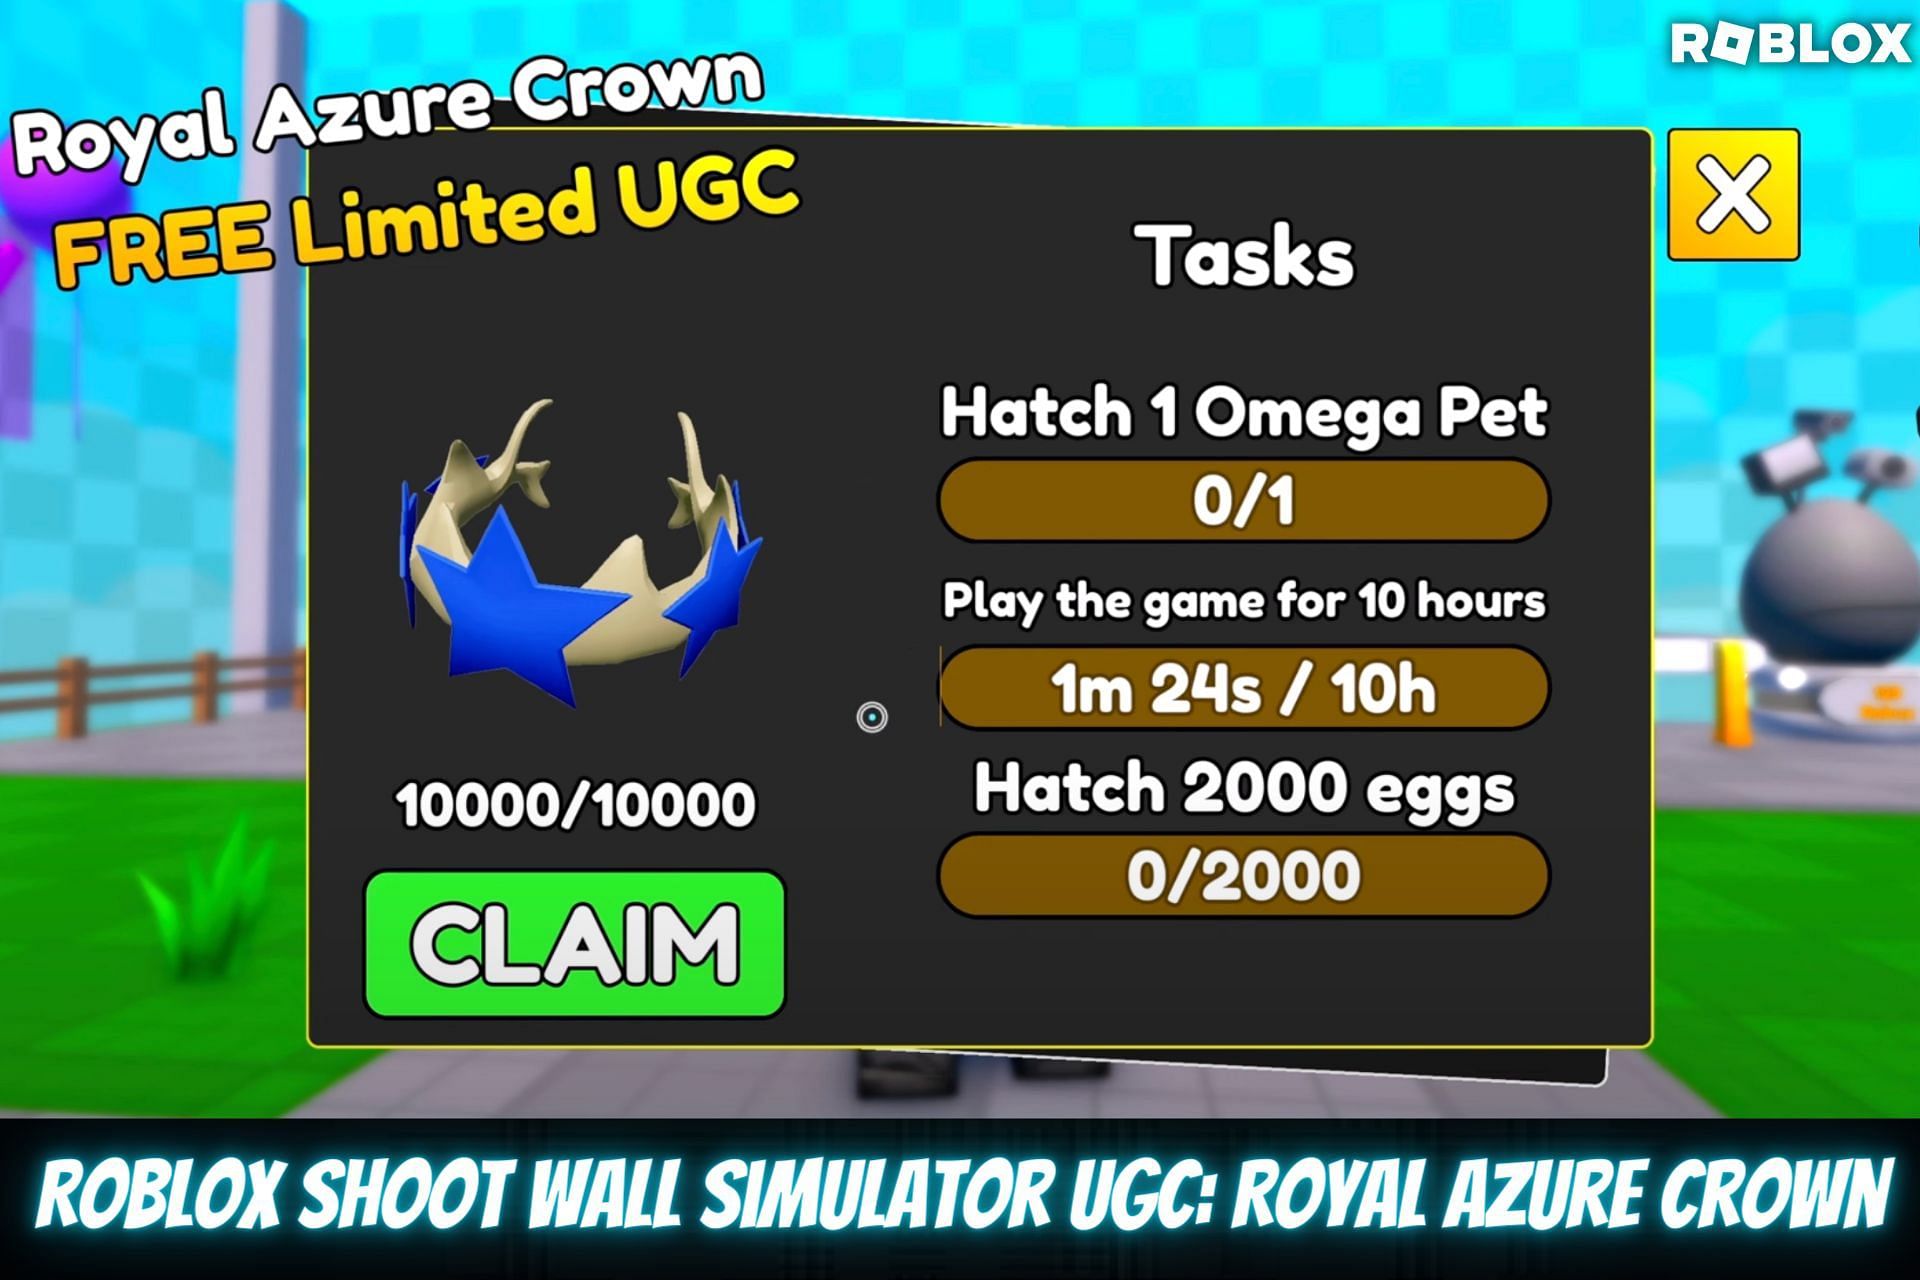 Roblox Shoot Wall Simulator UGC: Royal Azure Crown